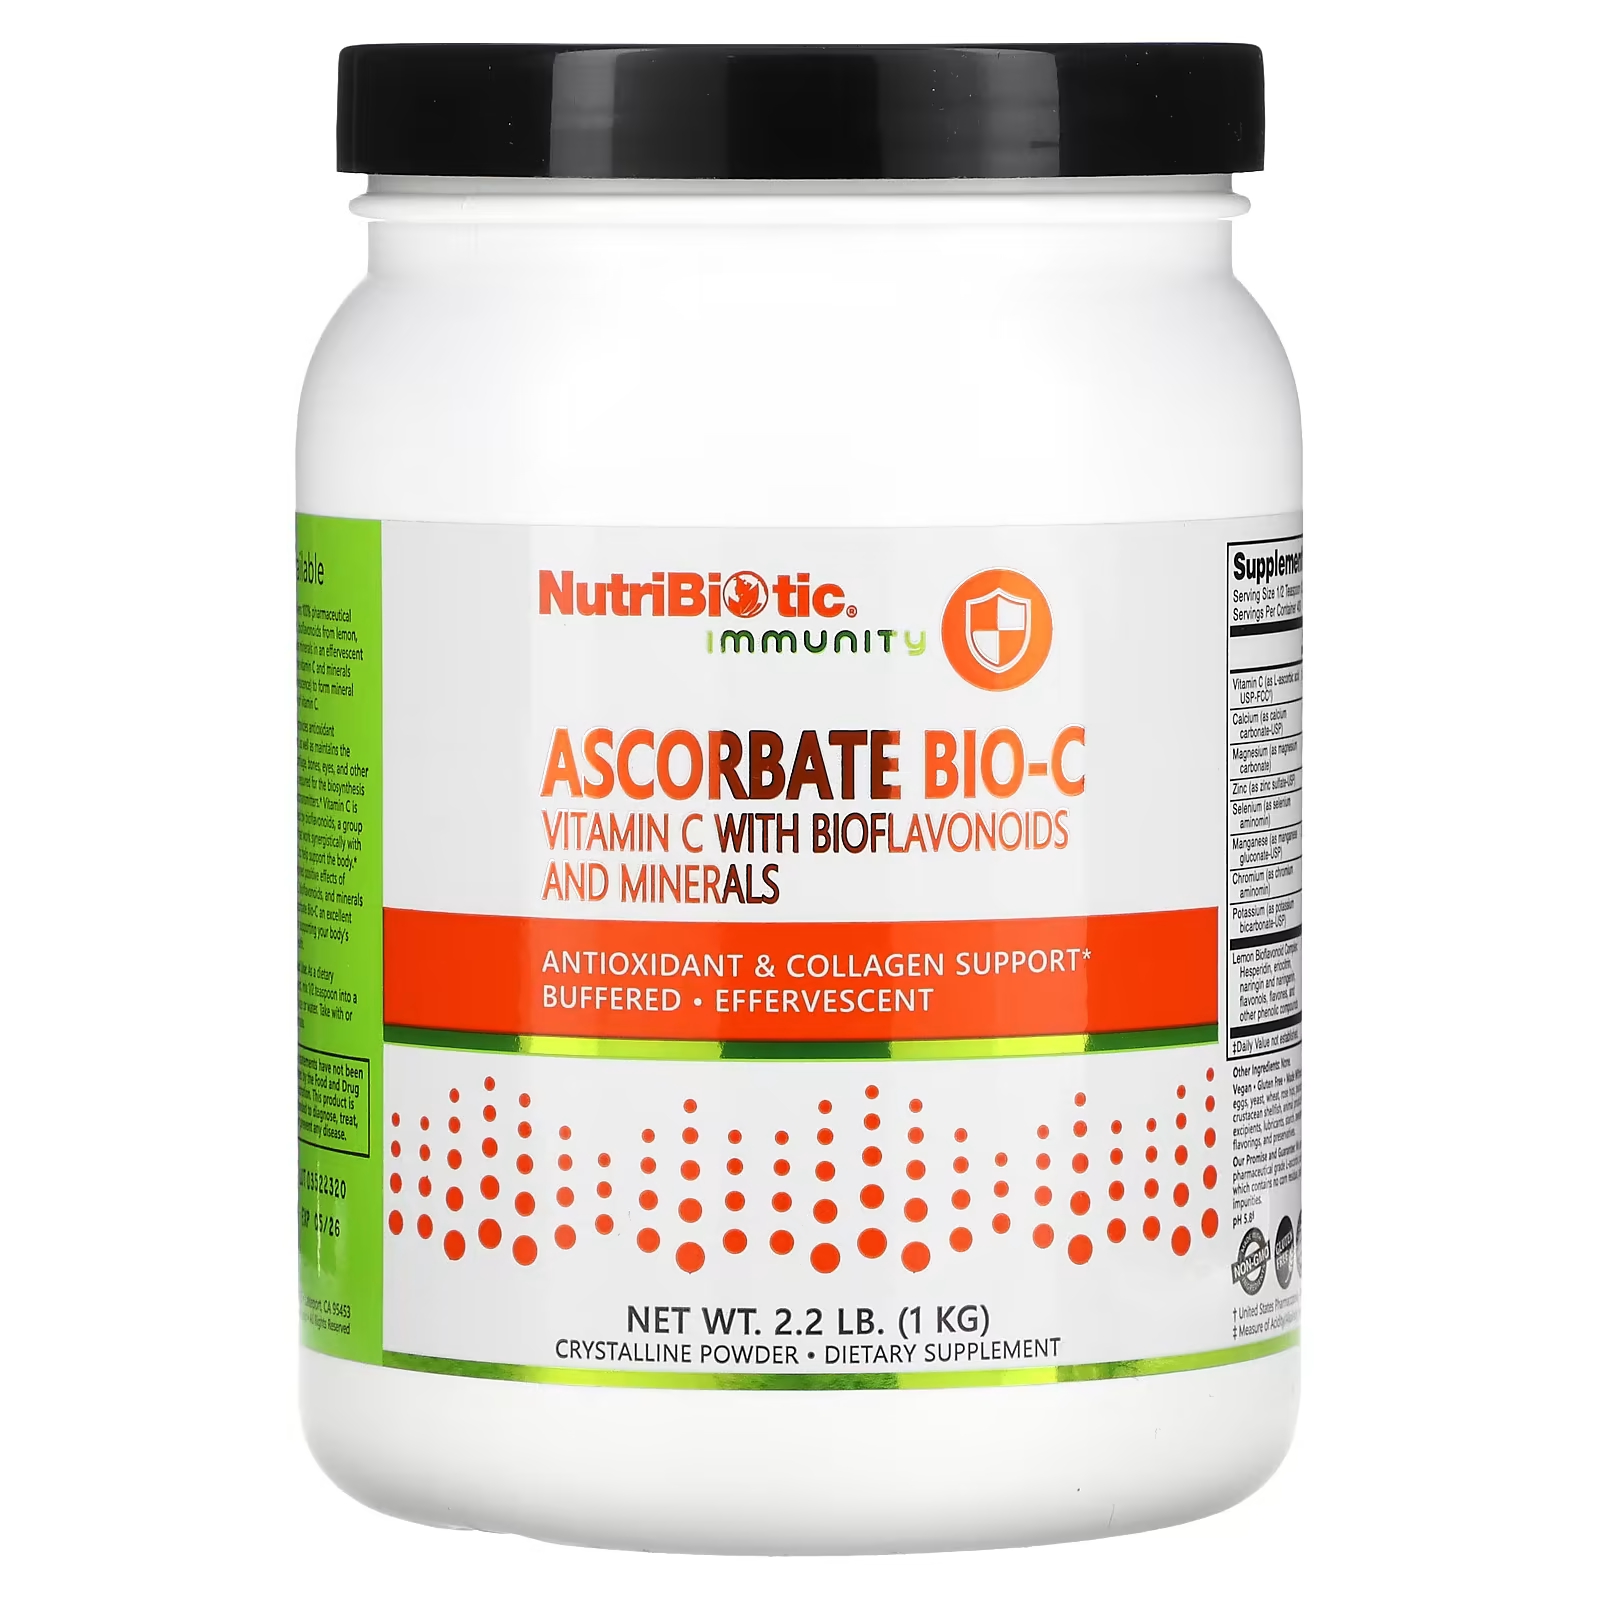 NutriBiotic Immunity Ascorbate Bio-C Витамин C с биофлавоноидами и минералами 2,2 фунта (1 кг) nutribiotic immunity аскорбиновая кислота с биофлавоноидами 1 кг 2 2 фунта